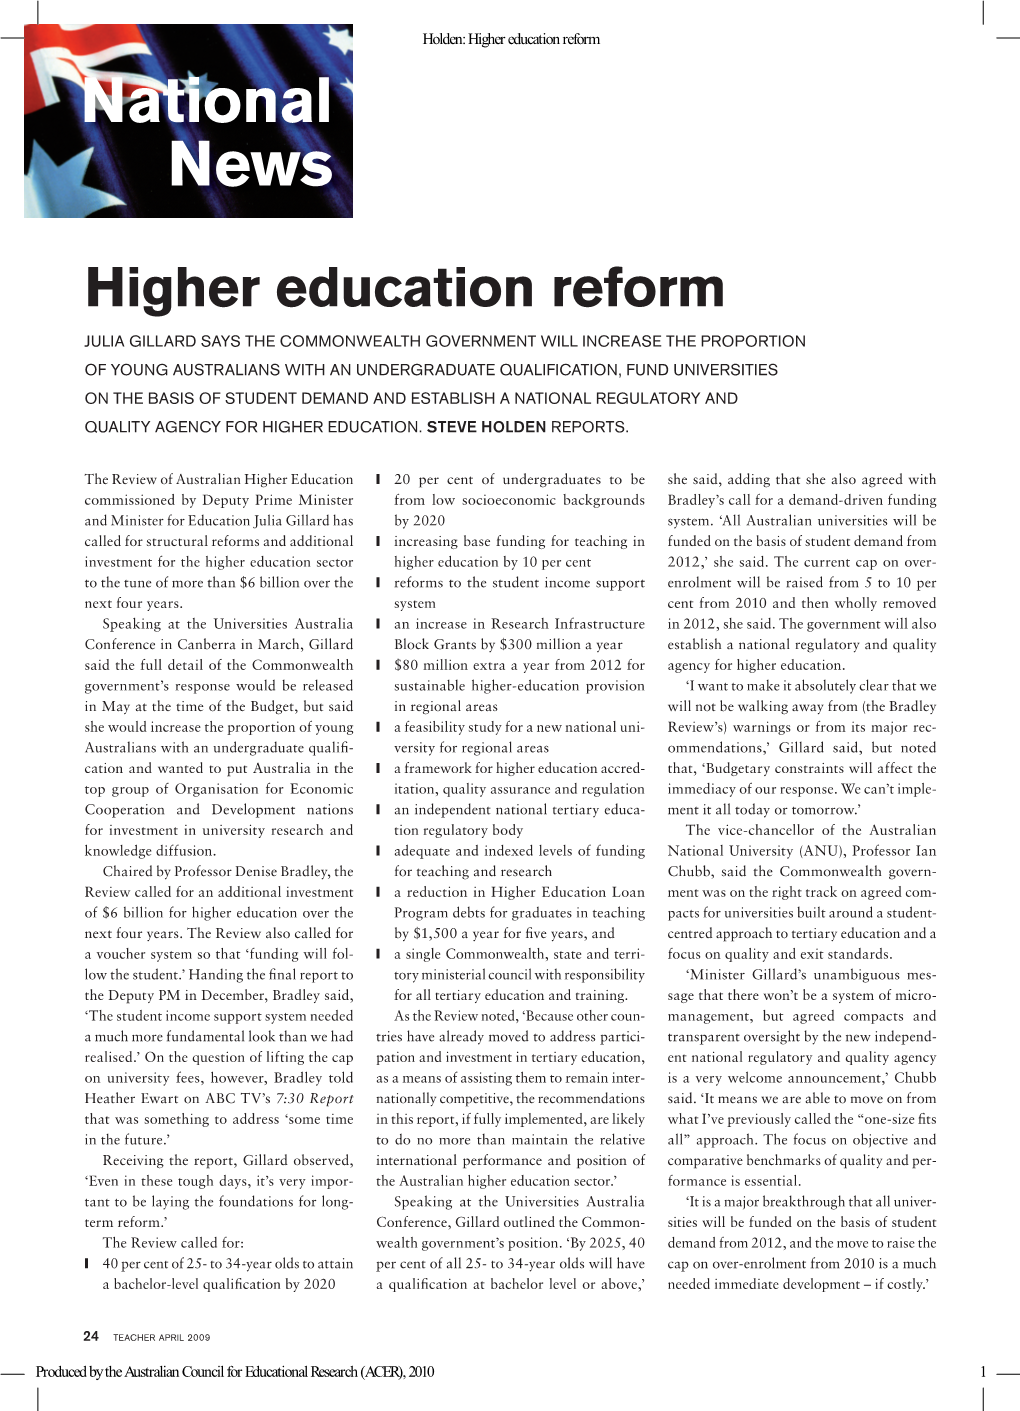 Higher Education Reform National News